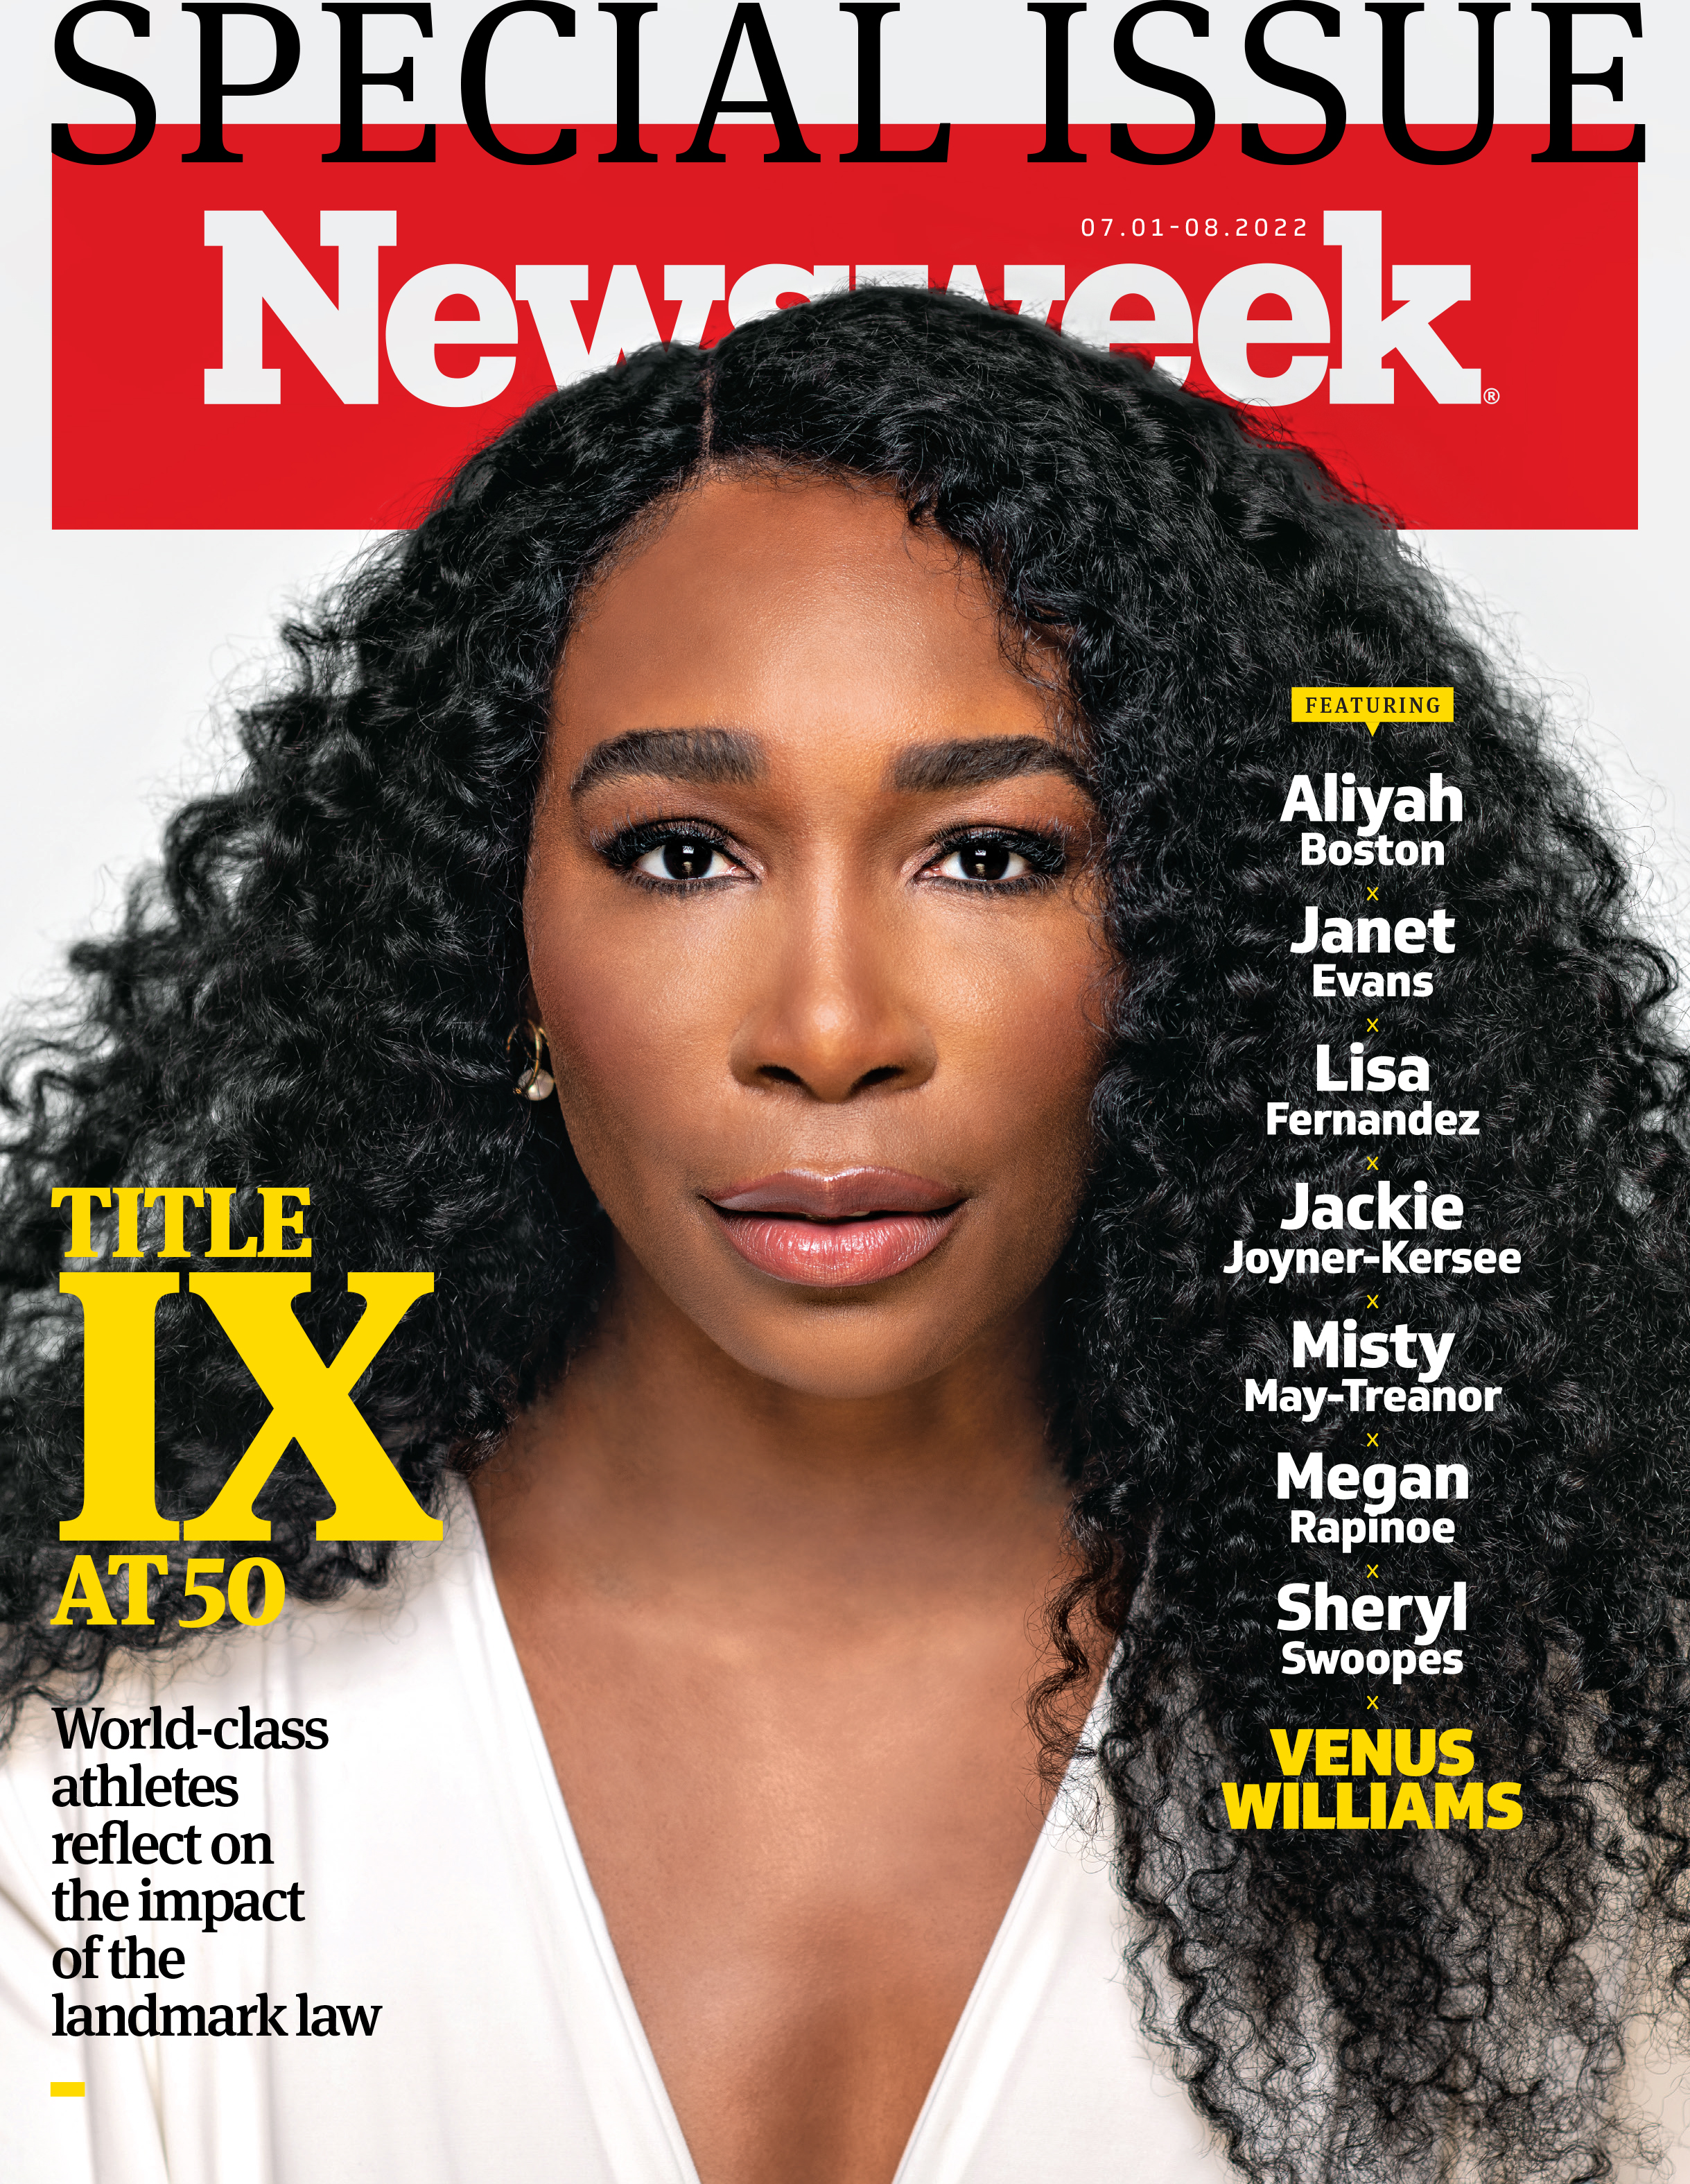 Newsweek Cover 07.01-08 Venus Williams 